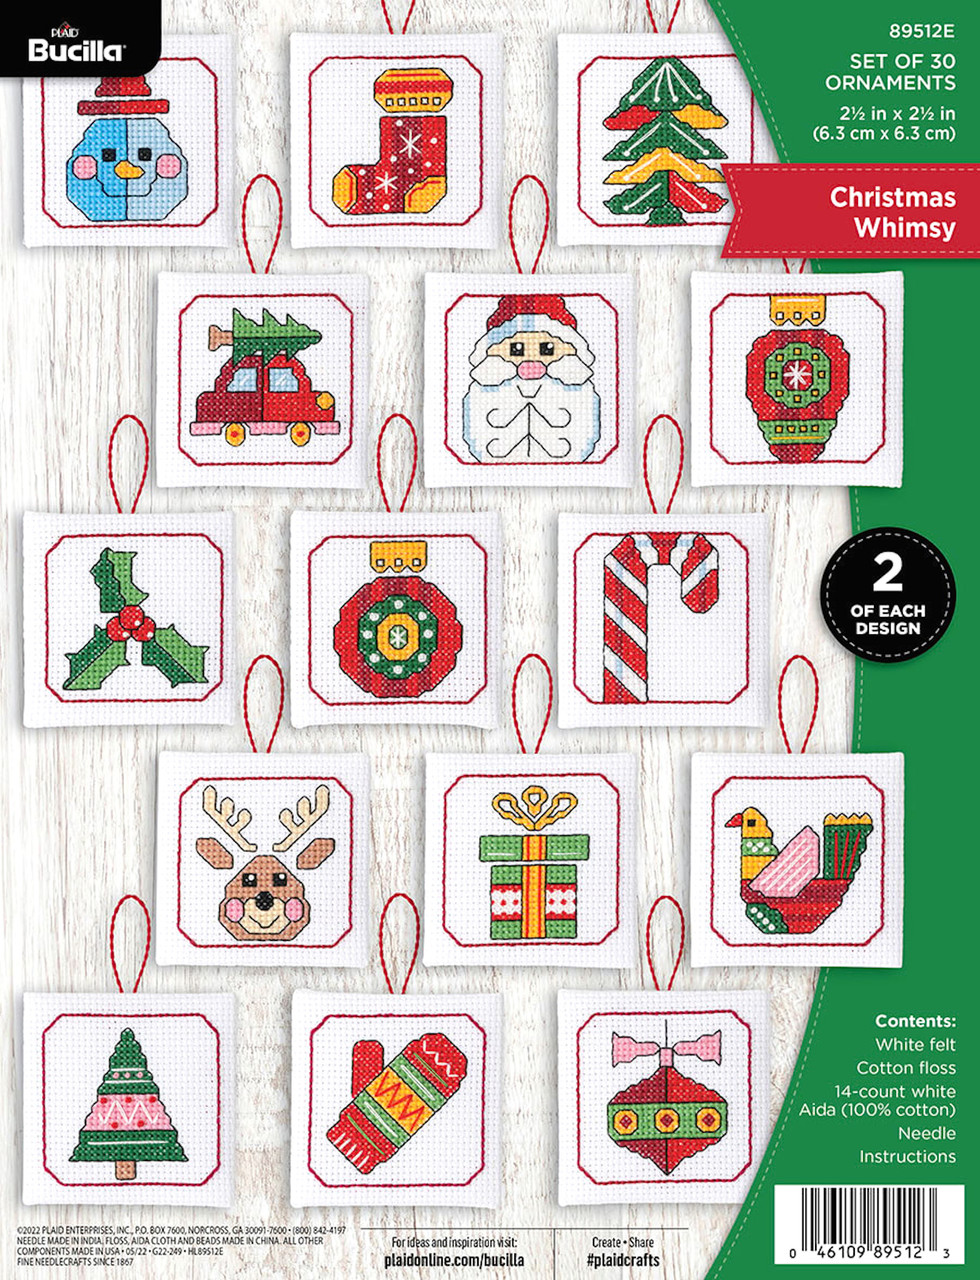 Plaid / Bucilla - Set of 30 Christmas Whimsy Ornaments